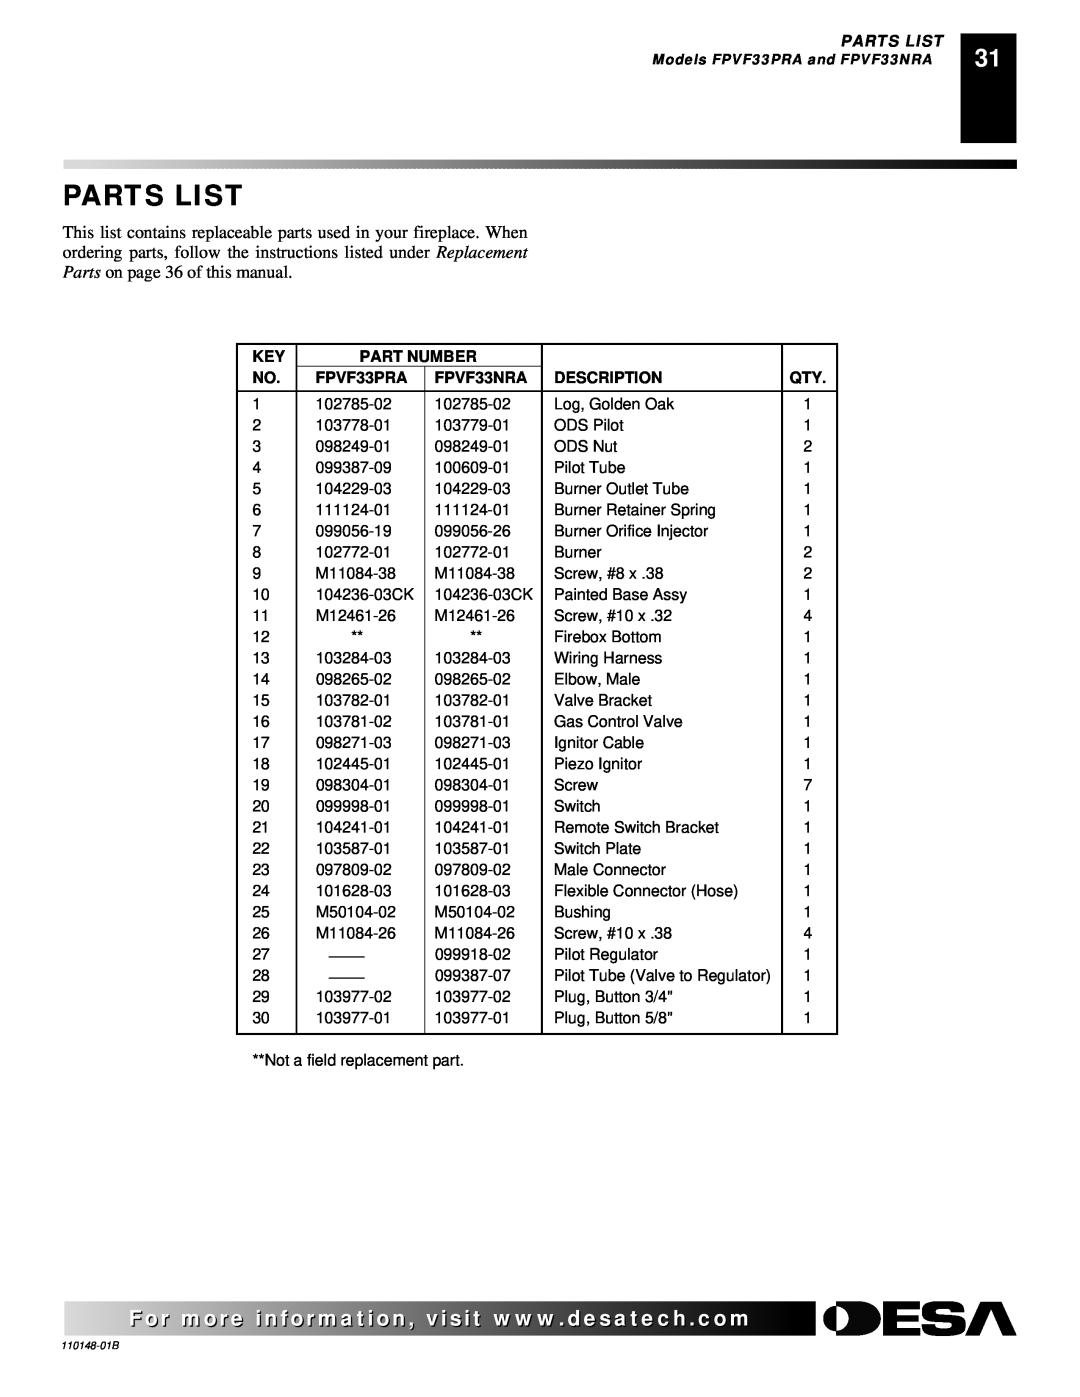 Desa FPVF33NRA, YGF33PRB installation manual Parts List, Part Number, FPVF33PRA, Description 